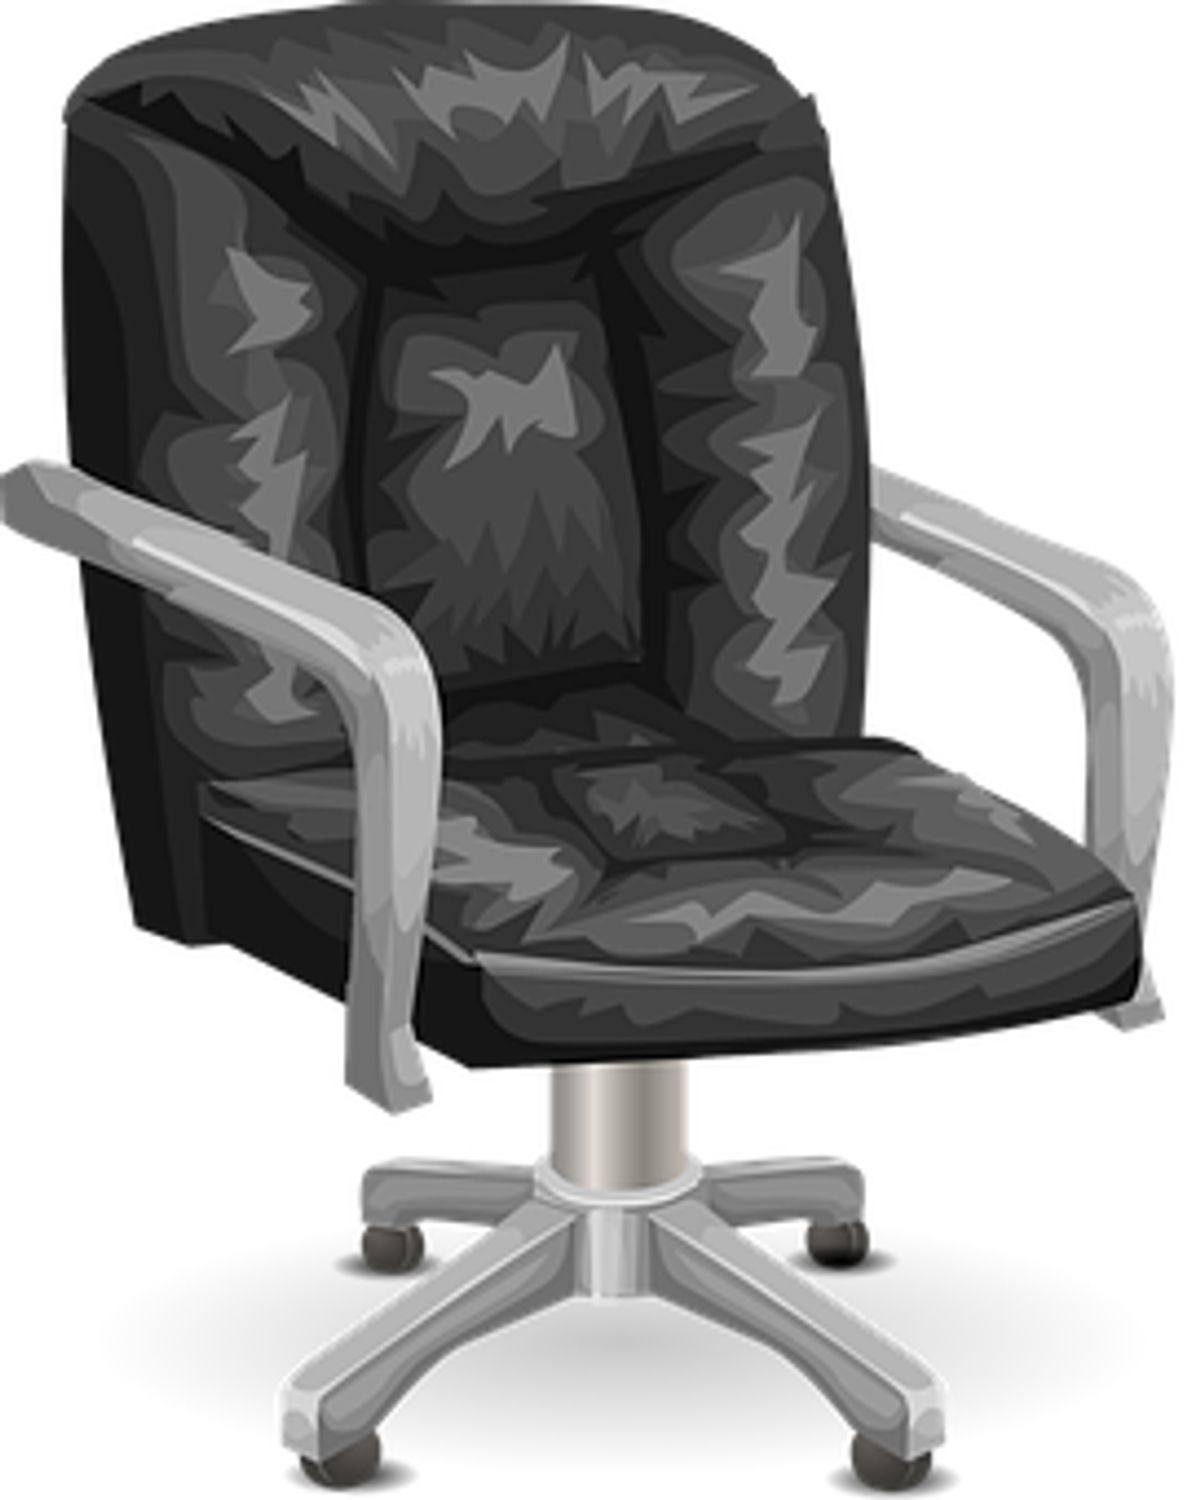 How To Create An Ergonomic Chair